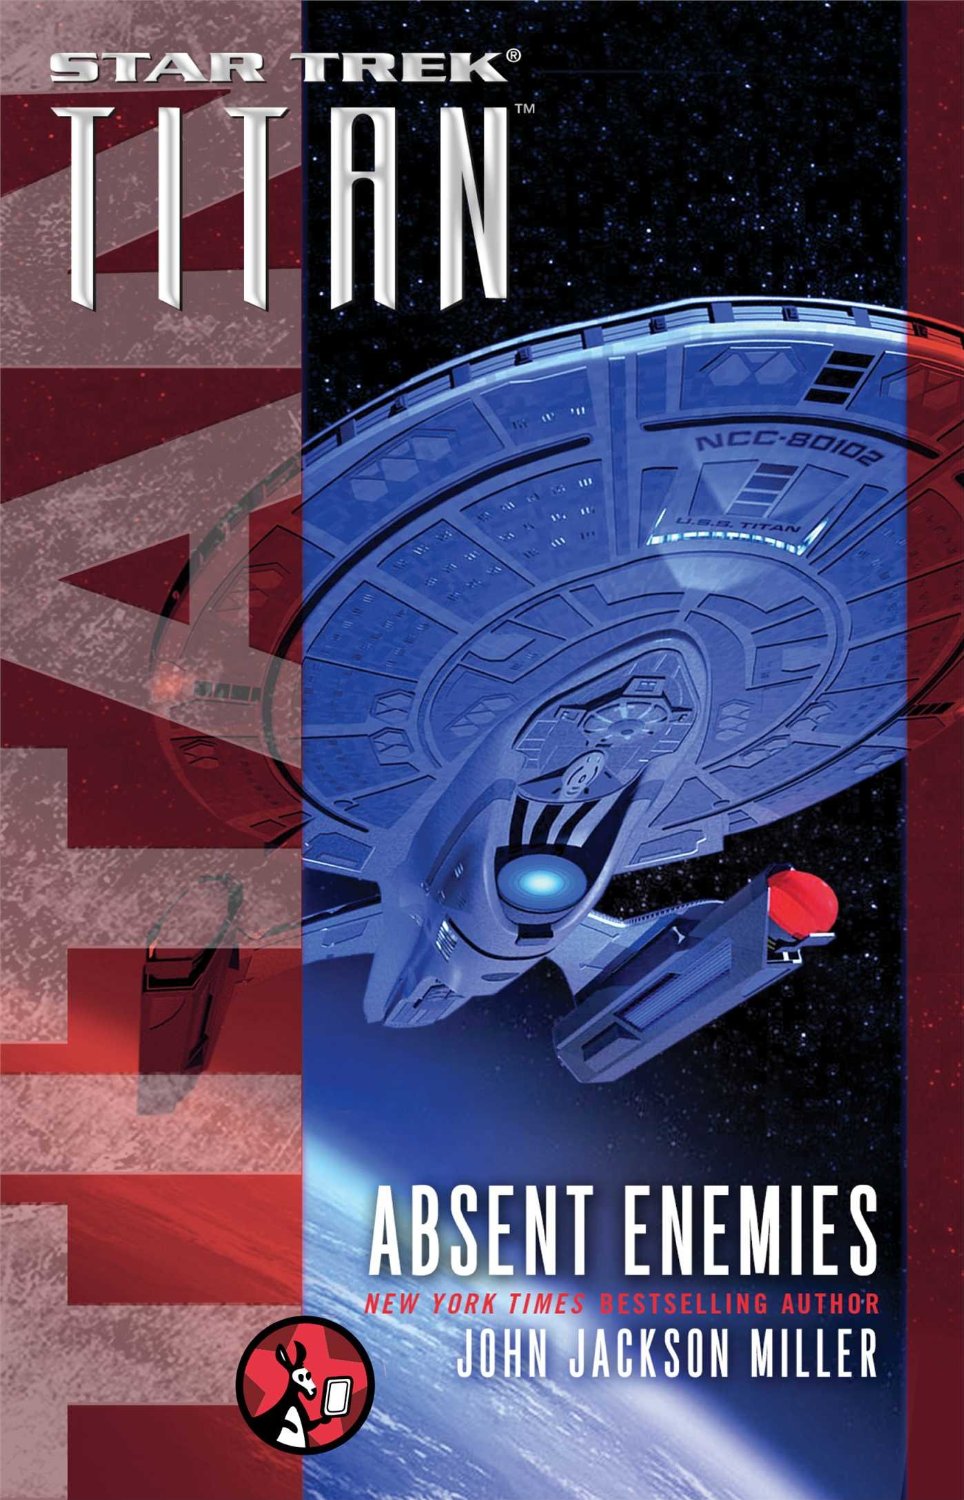 “Star Trek: Titan: Absent Enemies” Review by Lessaccurategrandmother.blogspot.com